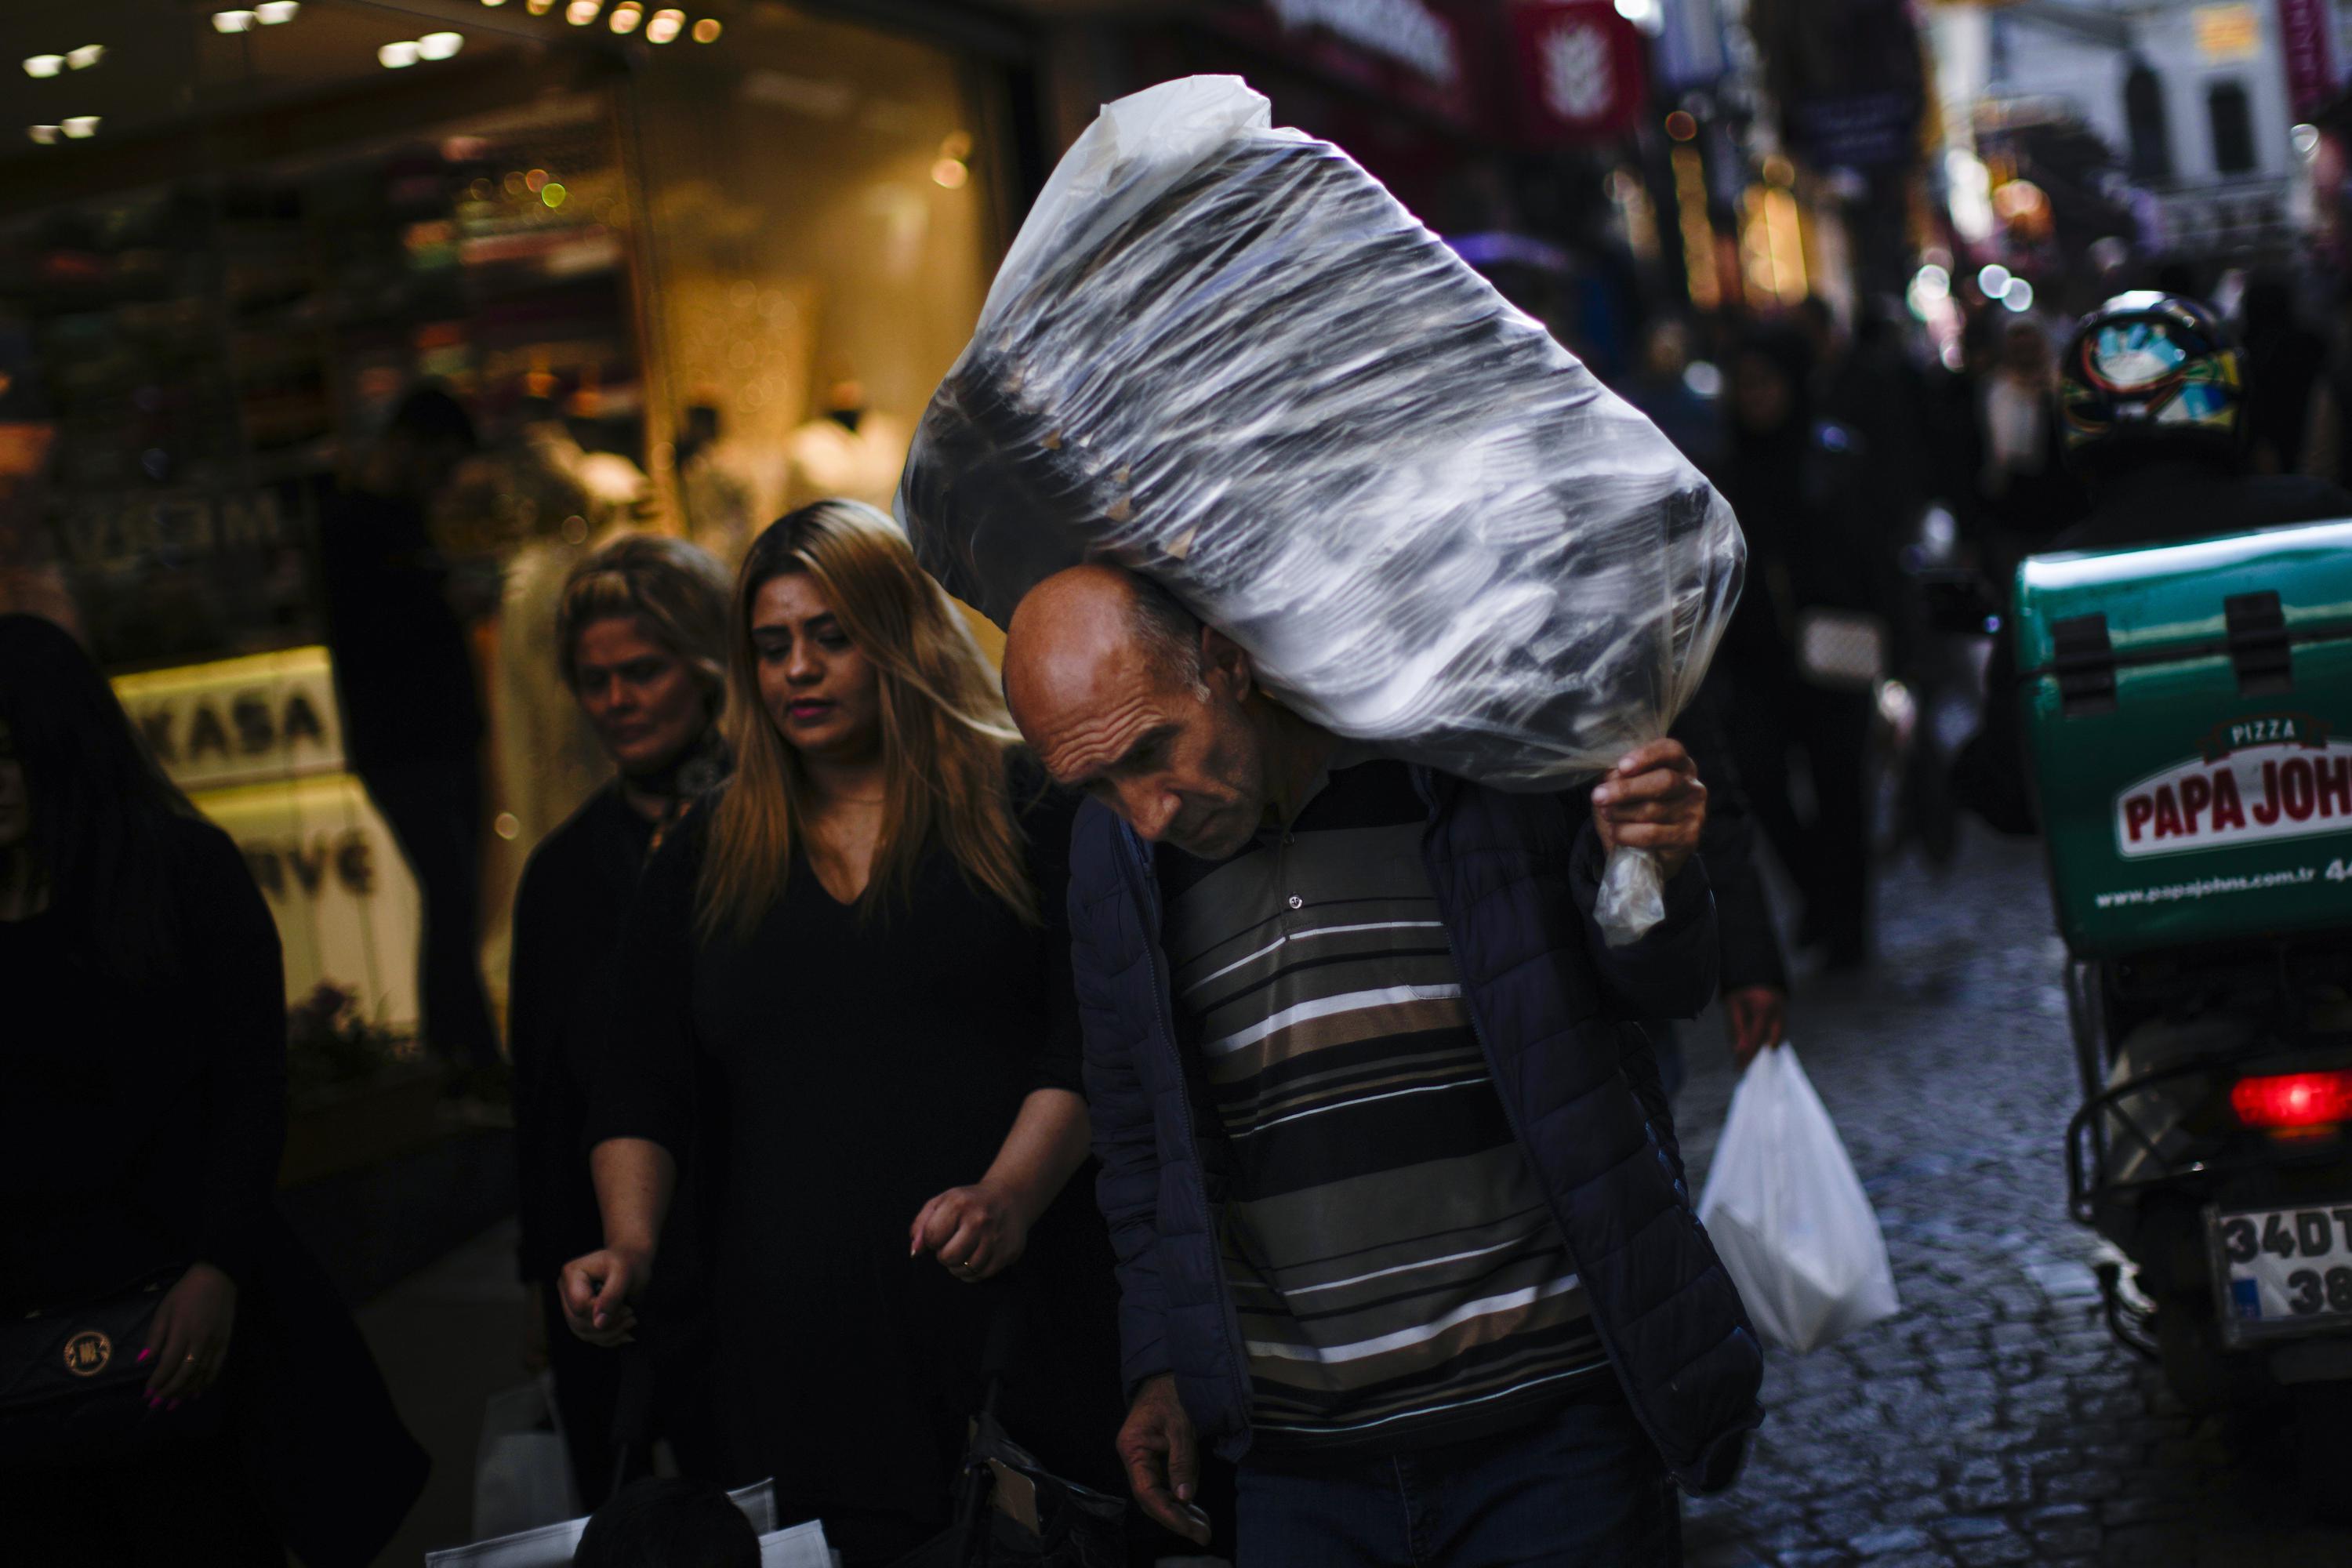 Inflation is hitting Turkish people hard